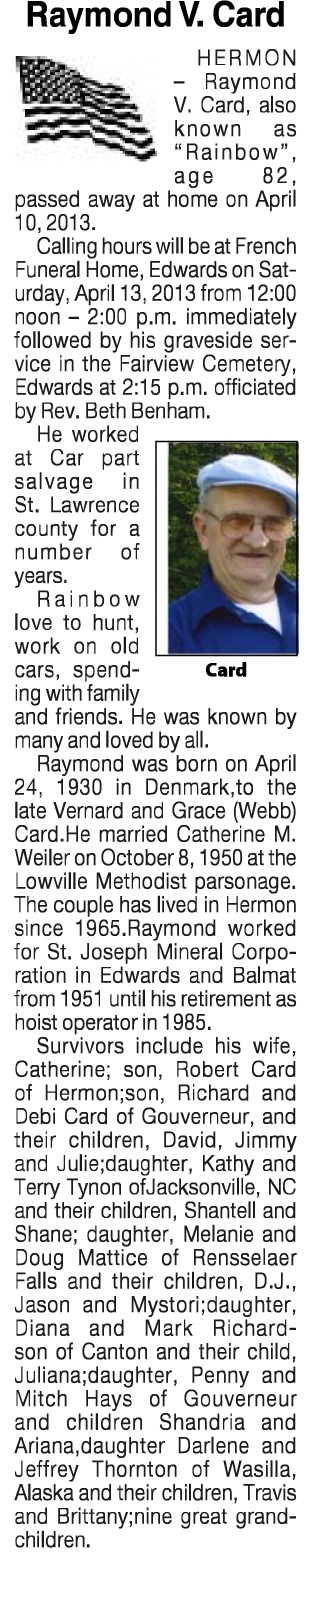 Raymond V. Card Obituary